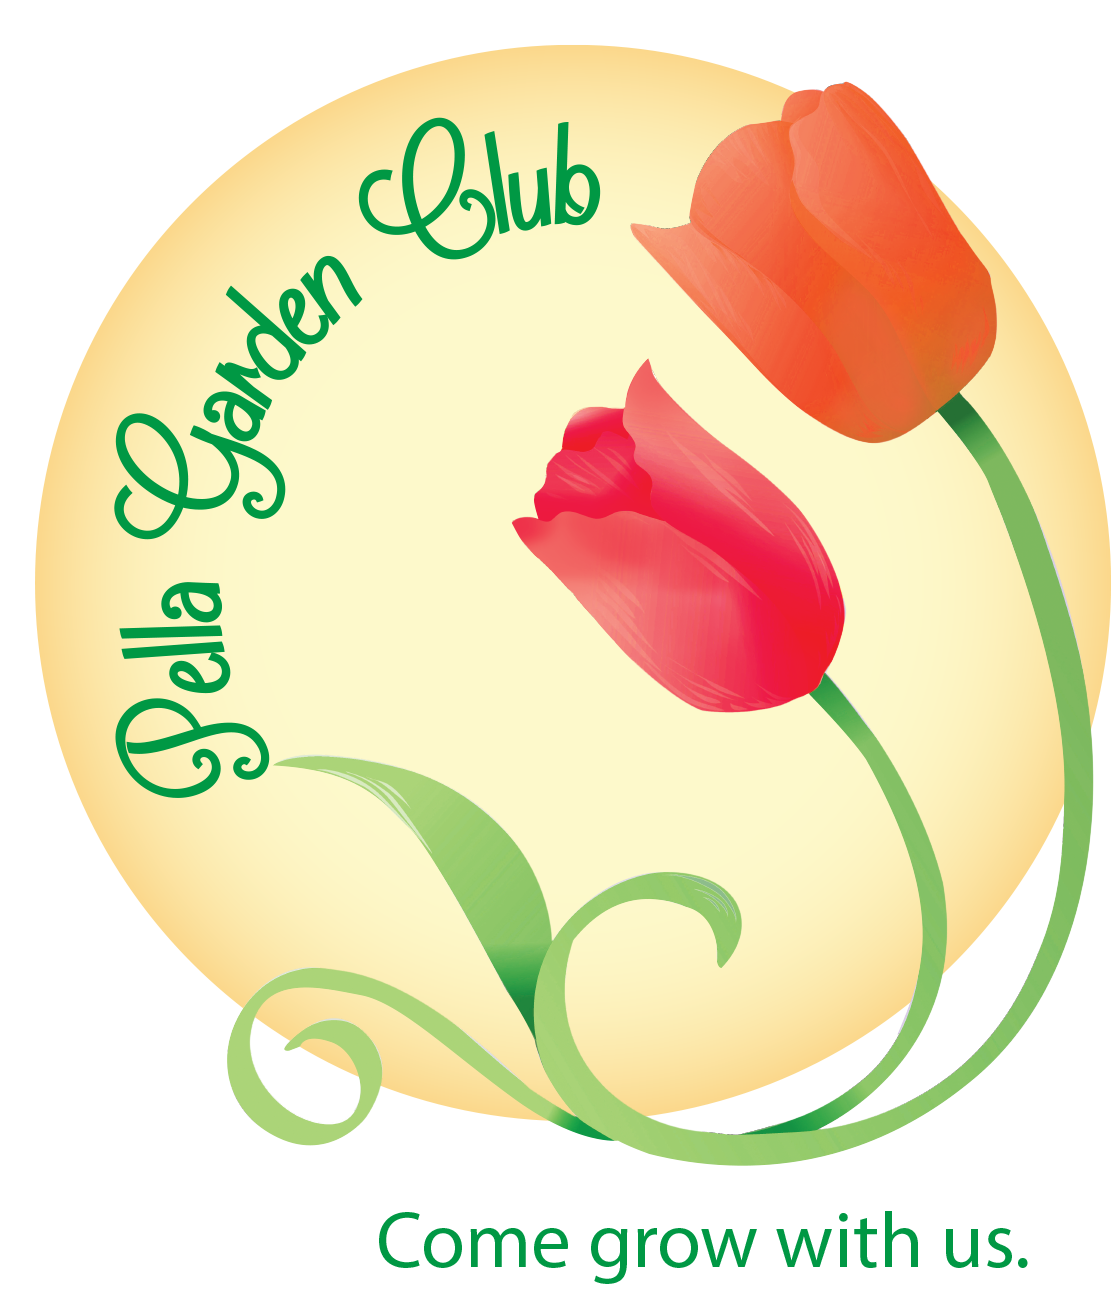 The Pella Garden Club